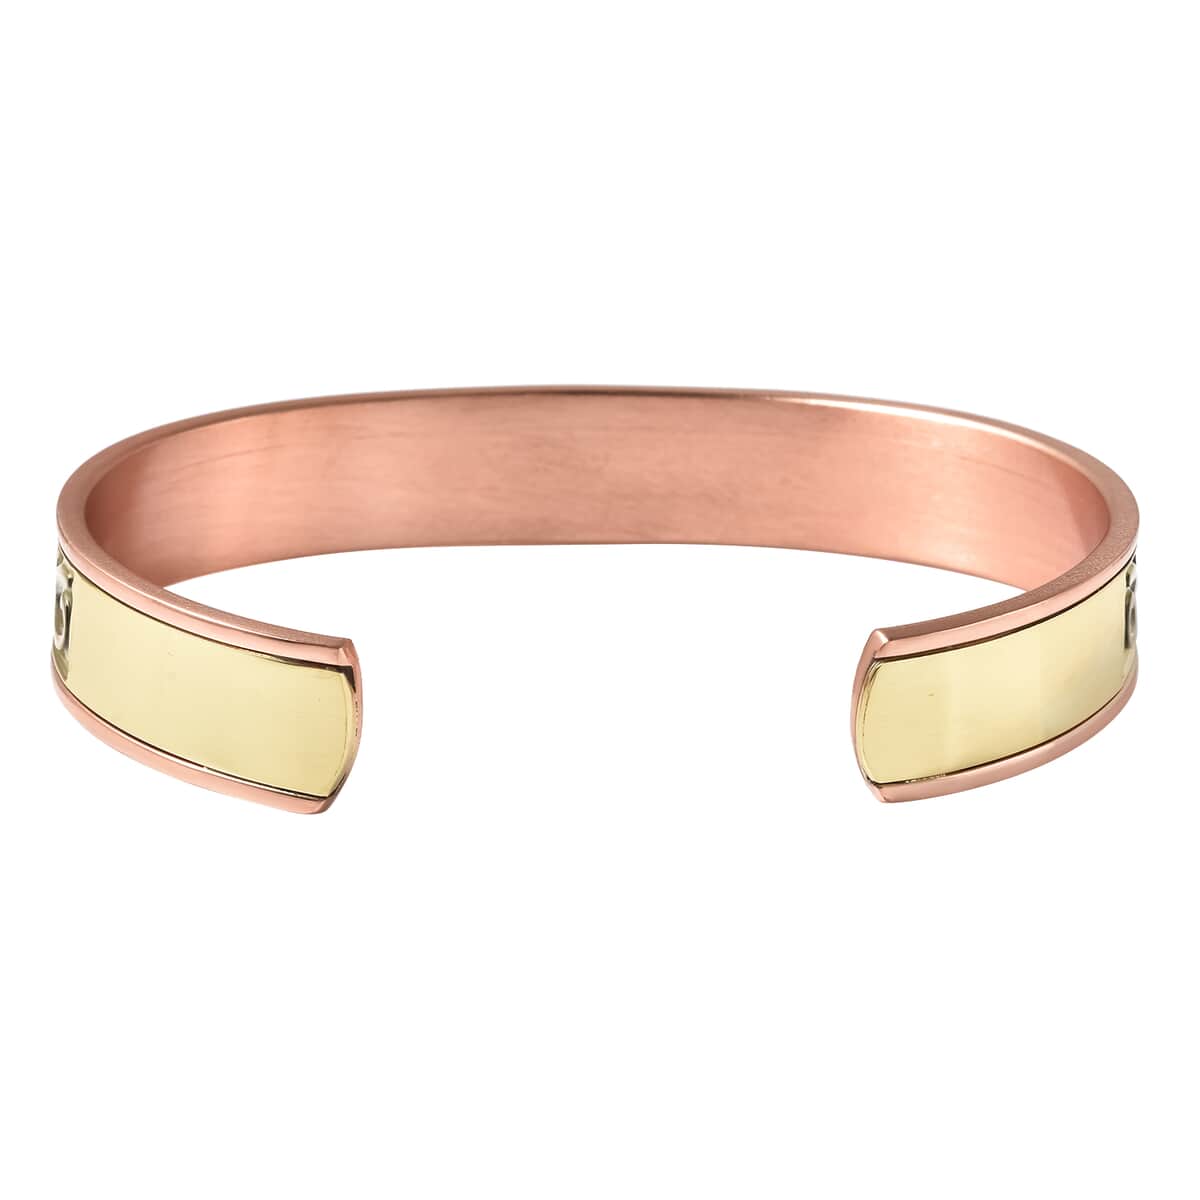 Magnetic By Design Swirl Pattern Cuff Bracelet | Durable Cuff Bracelet | Dual Tone Cuff Bracelet |Cuff Bracelet in Rosetone And Goldtone (7.50 In) image number 5